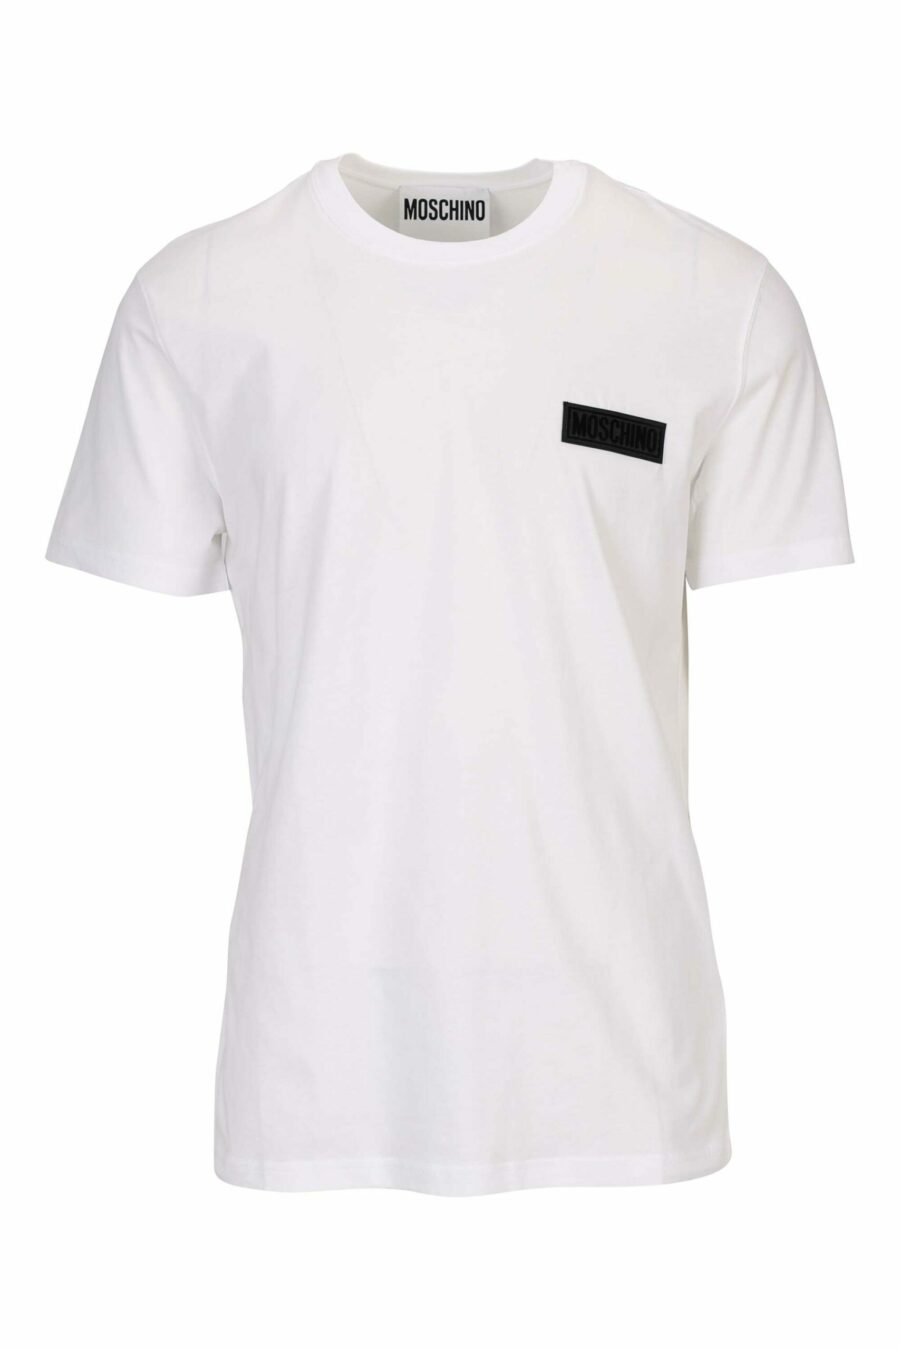 Camiseta blanca con minilogo etiqueta negro - 667113394664 scaled